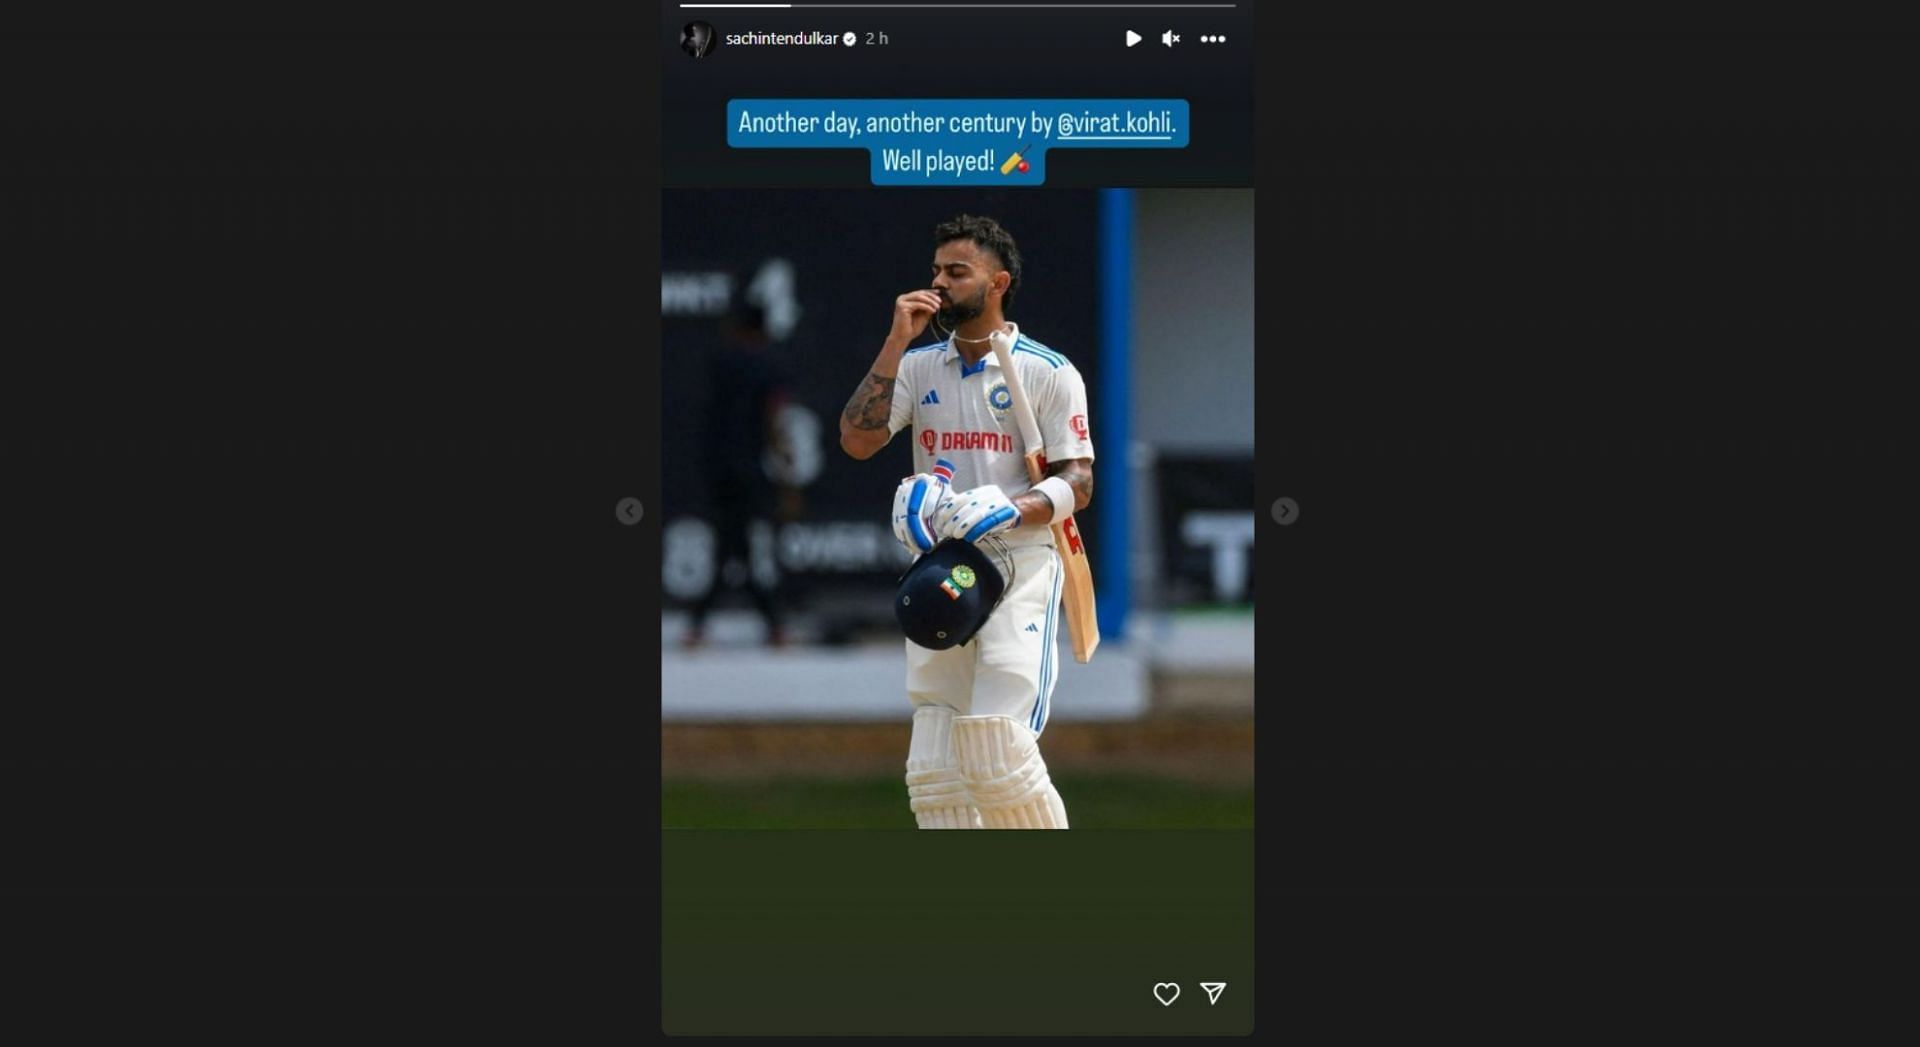 Sachin Tendulkar shared a picture of Virat Kohli celebrating his third Test century against the West Indies.